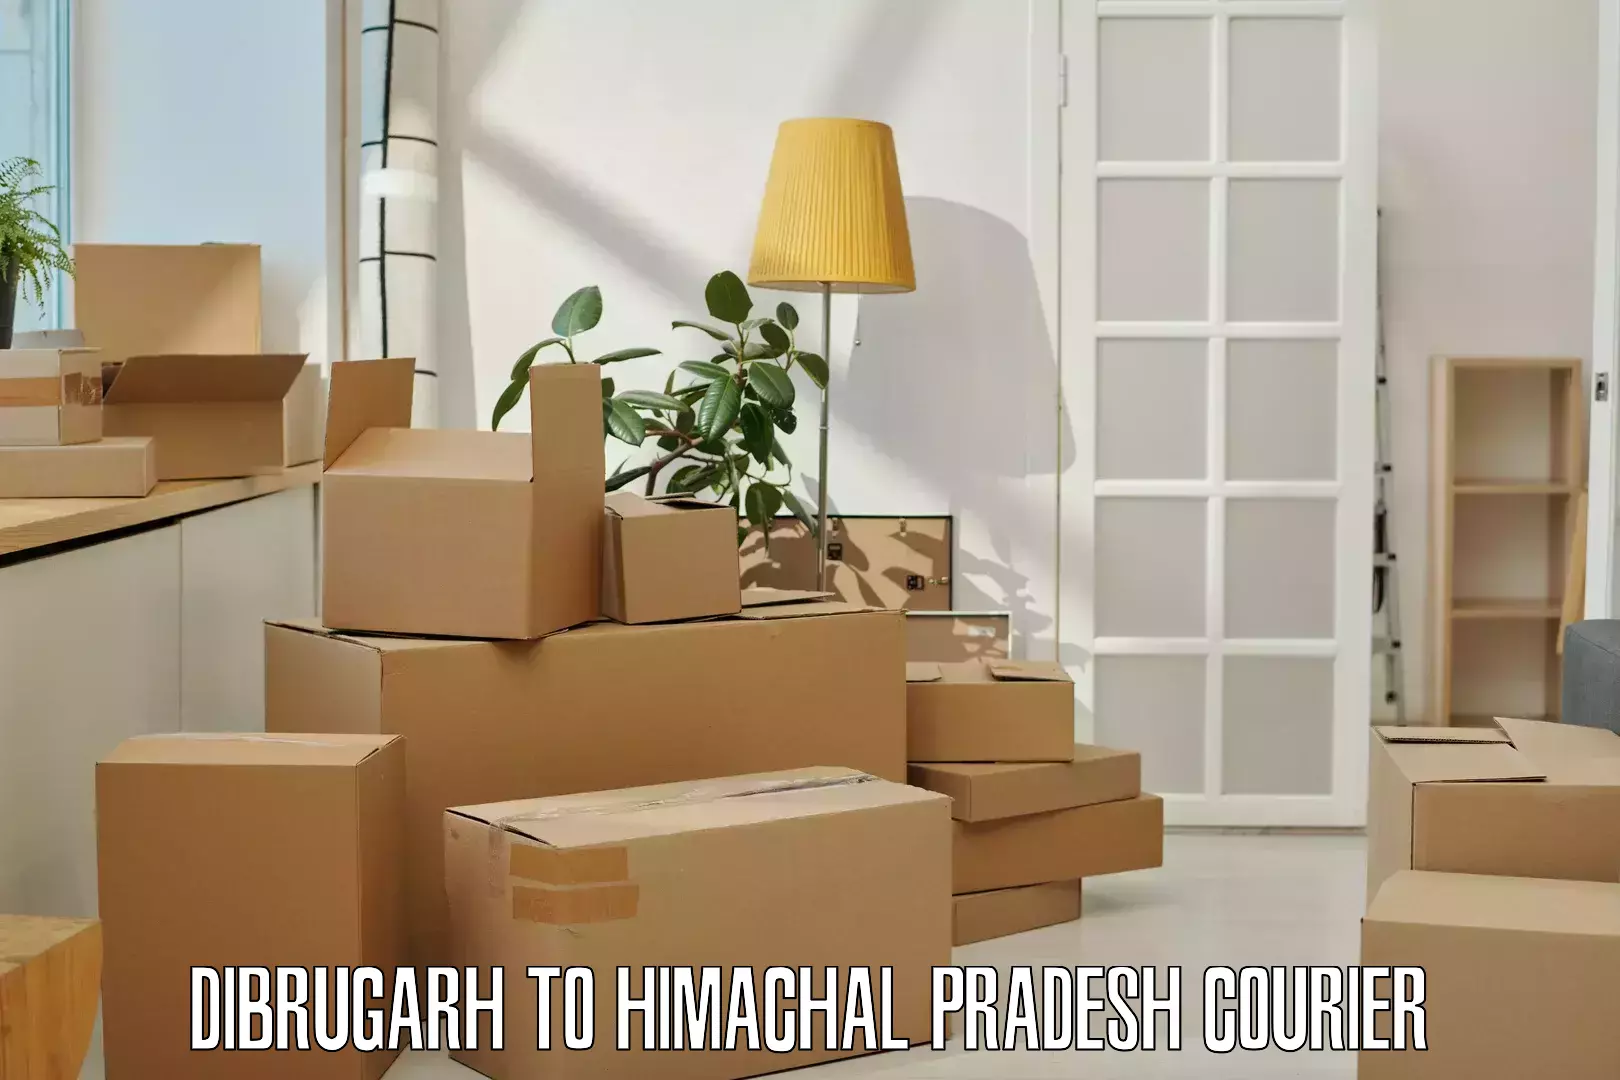 Urgent courier needs Dibrugarh to Jukhala